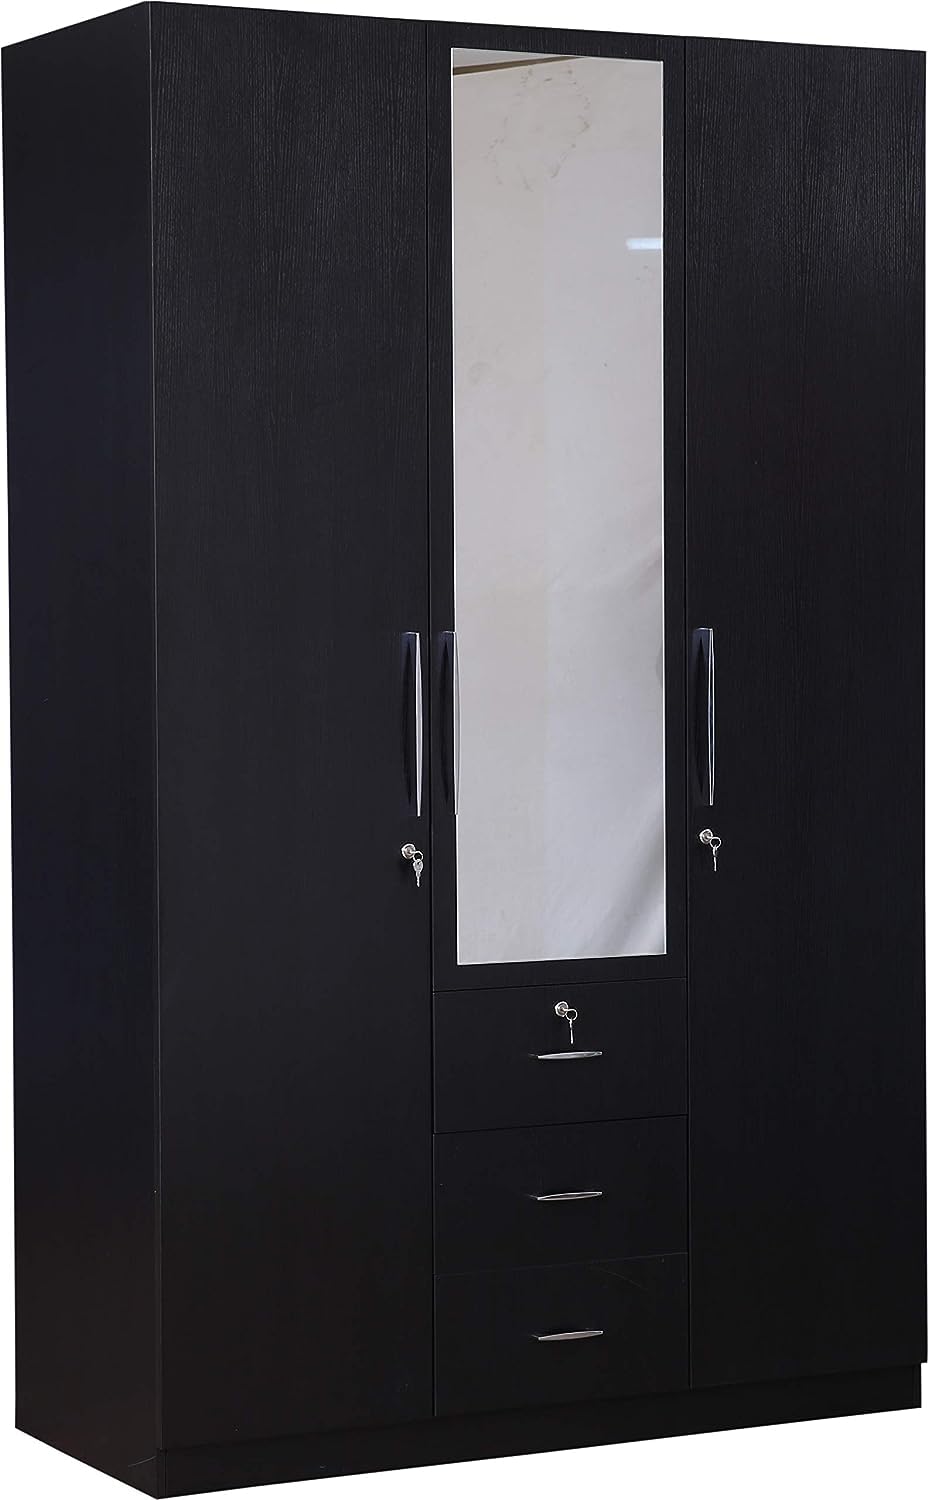 CASPIAN Furniture 3 Door Wardrobe for Bedroom with Super Utility. (Colour Rainforest Dark) Size 78 X 48 X 21